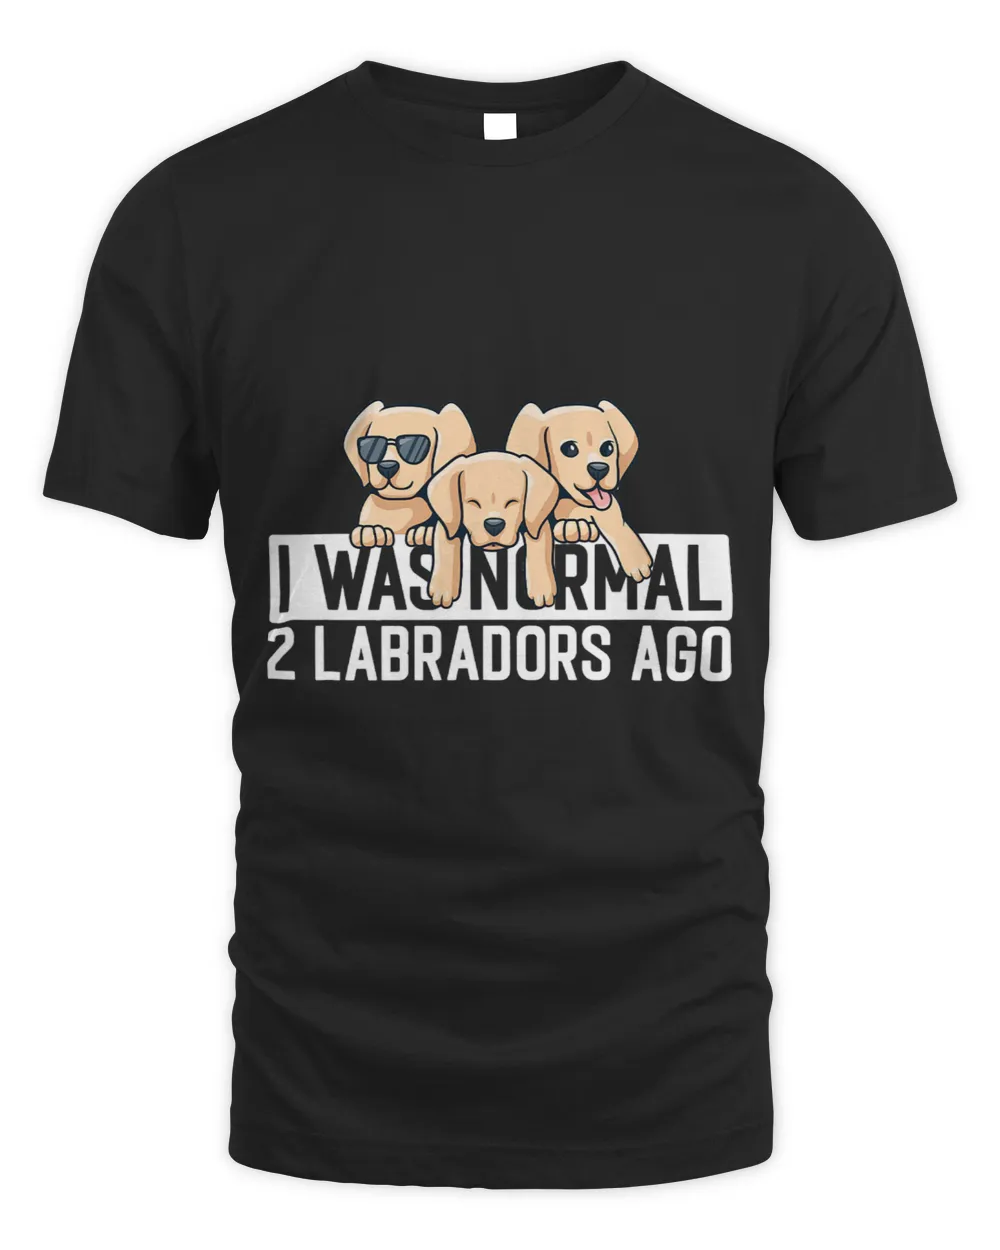 Labrador Lab Dog I was normal two labradors ago